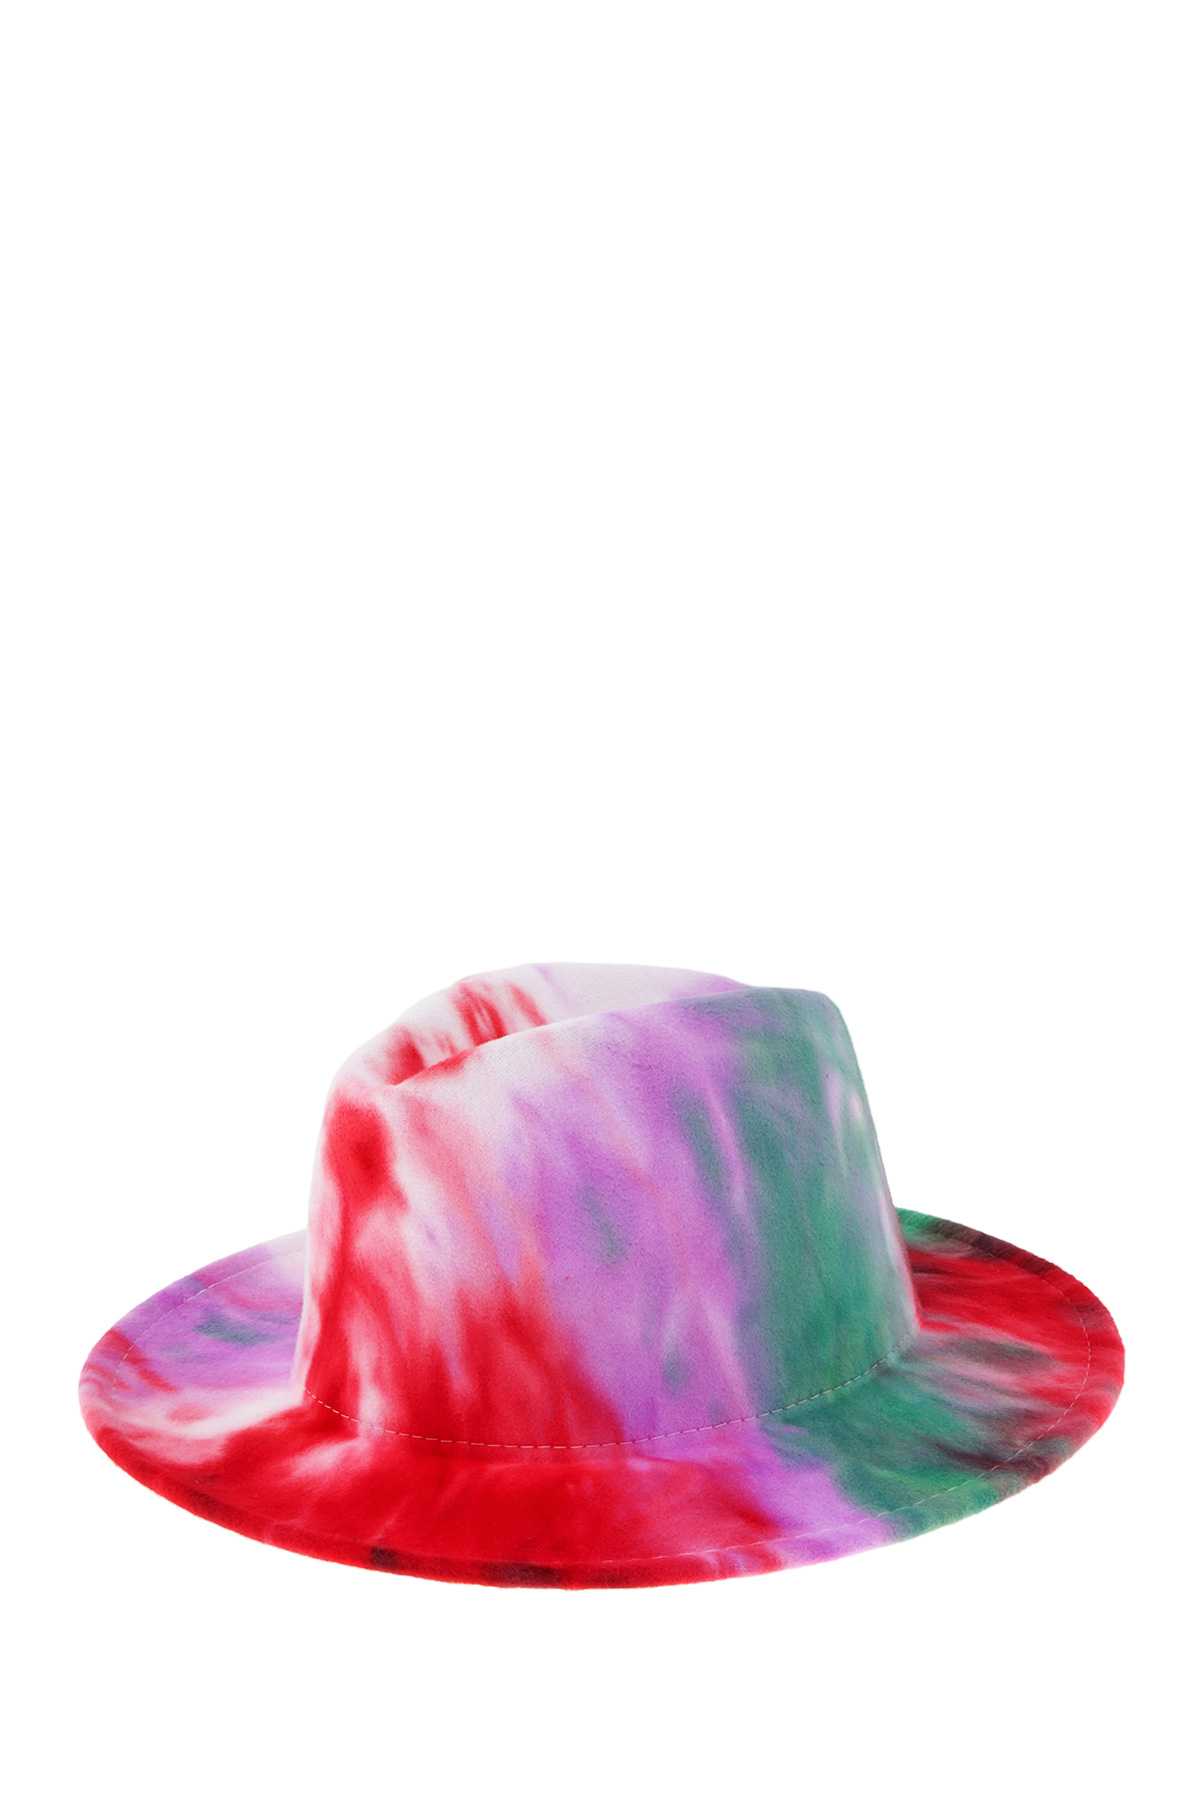 Tie Dye Print Fedora Felt Hat